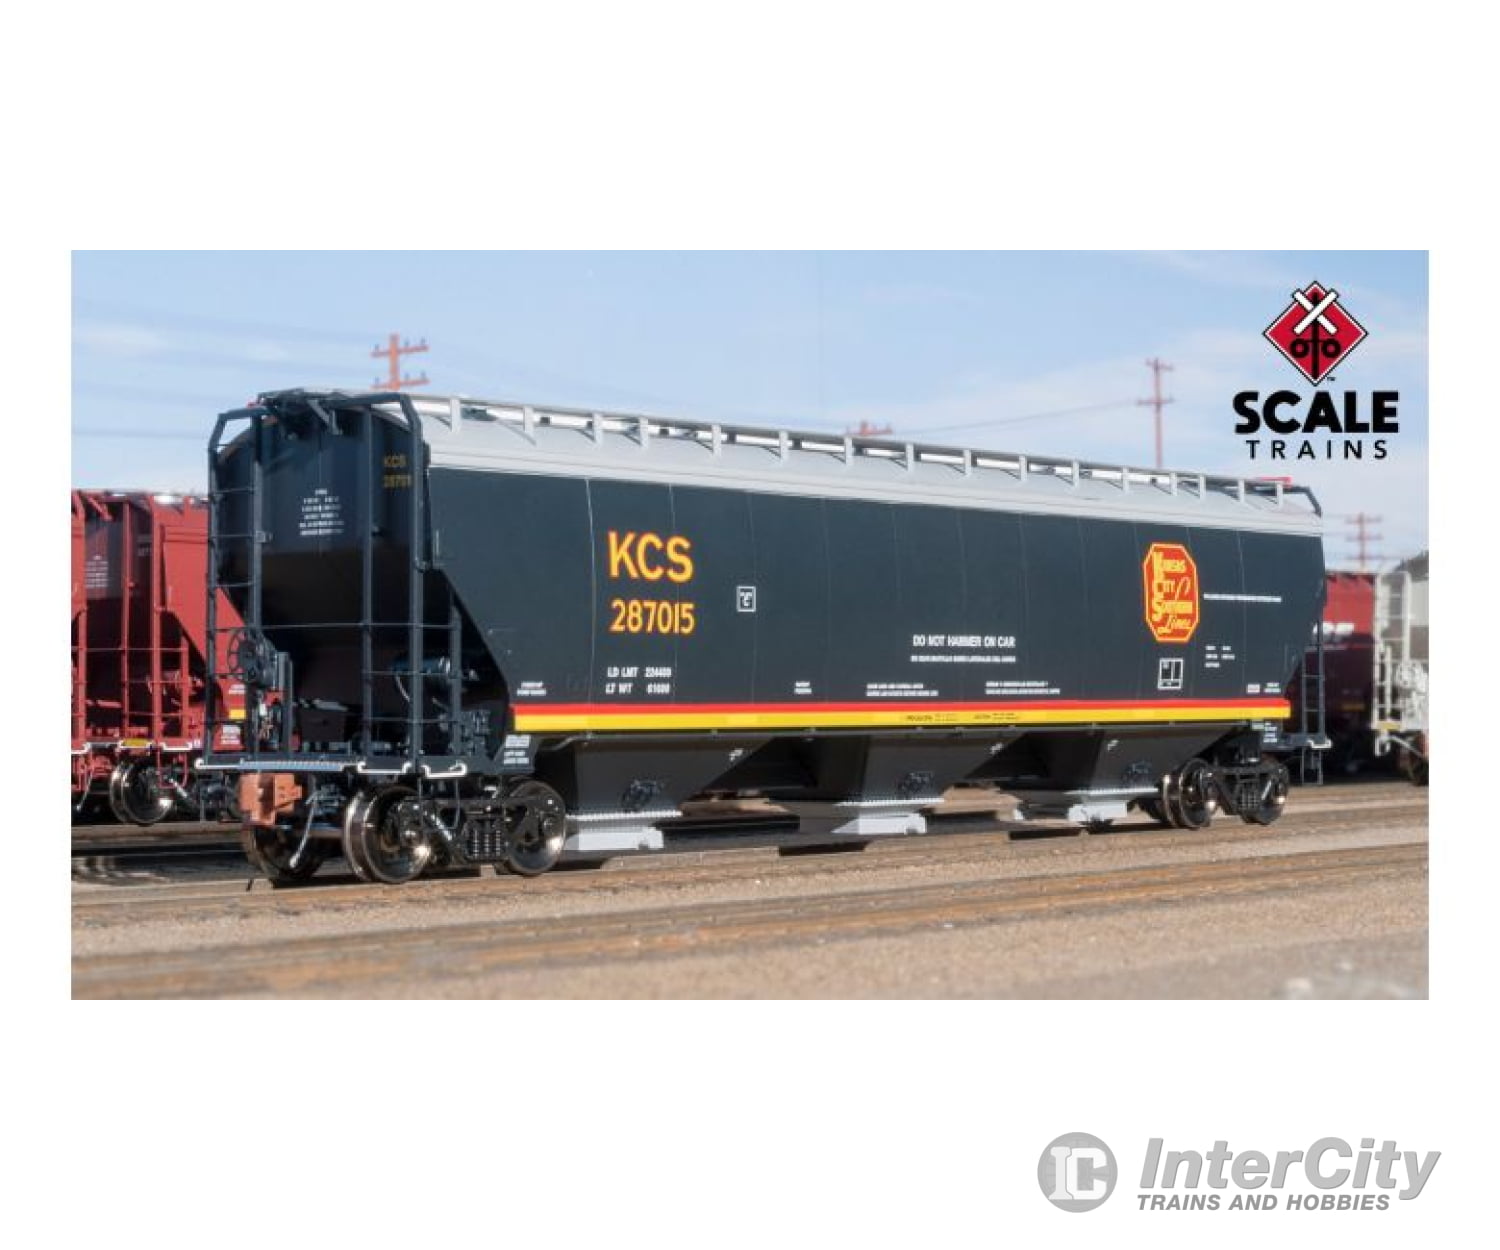 Scale Trains Sxt30820 Rivet Counter Ho Gunderson Covered Hopper Kansas City Southern - Belle Rd# Kcs